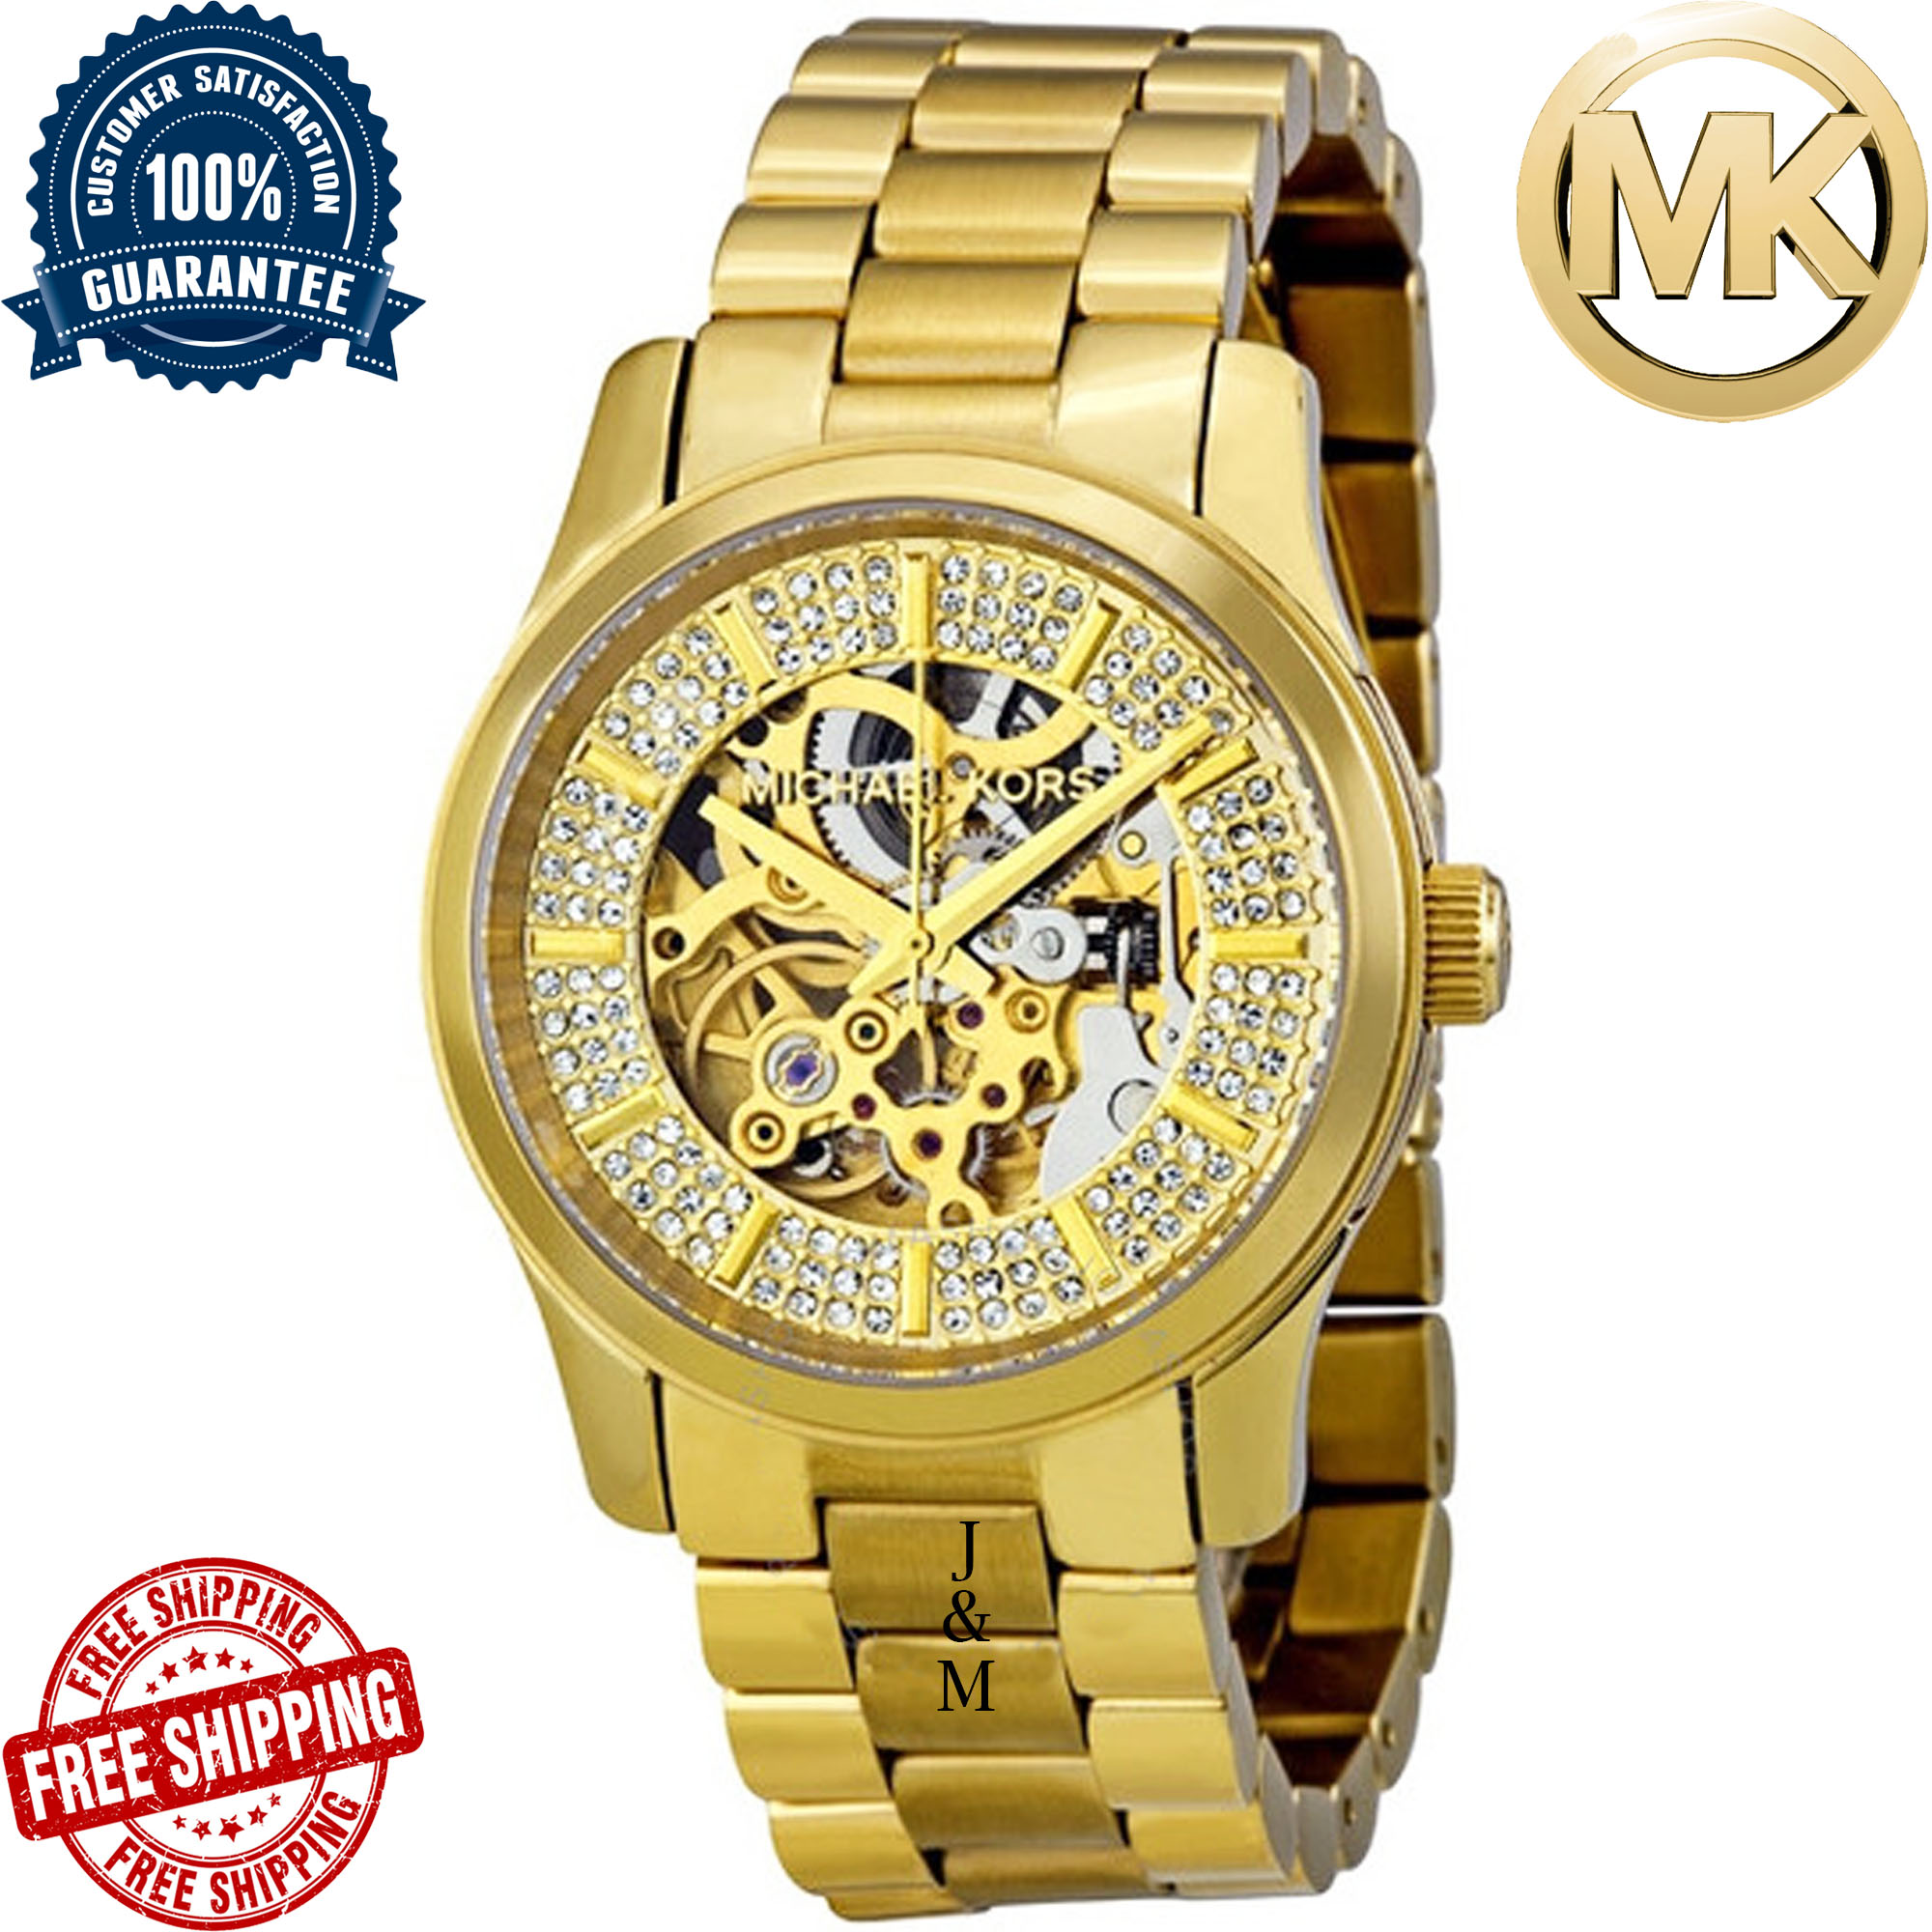 Mk digital watch | Michael kors jewelry, Digital watch, Michael kors watch-sonthuy.vn